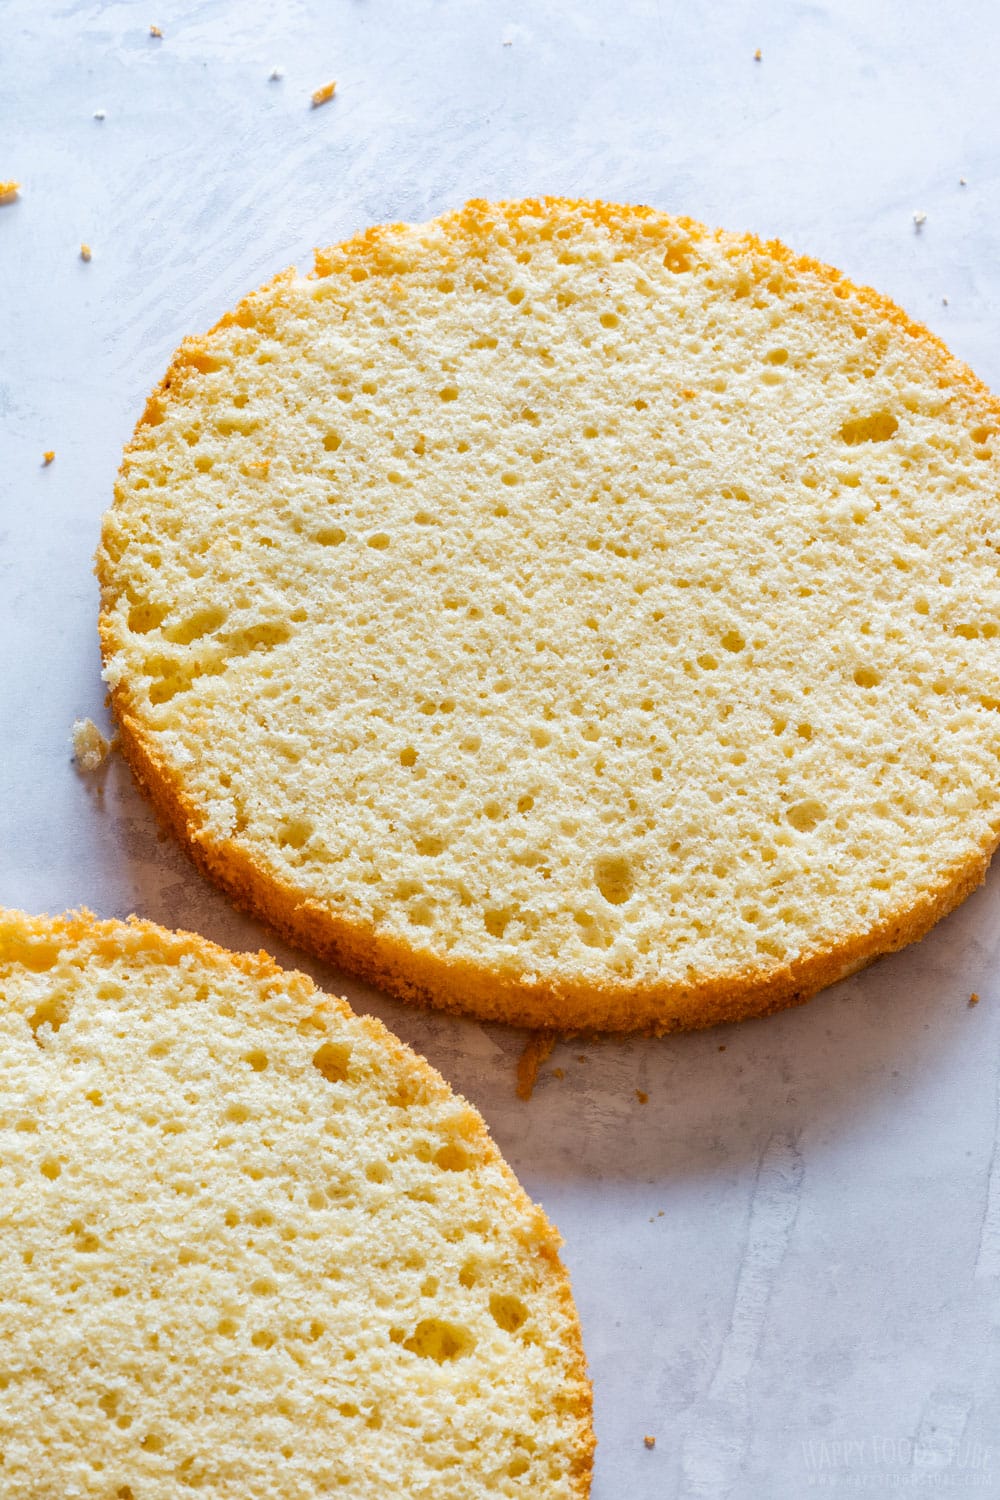 Closeup of sponge cake texture after baking.